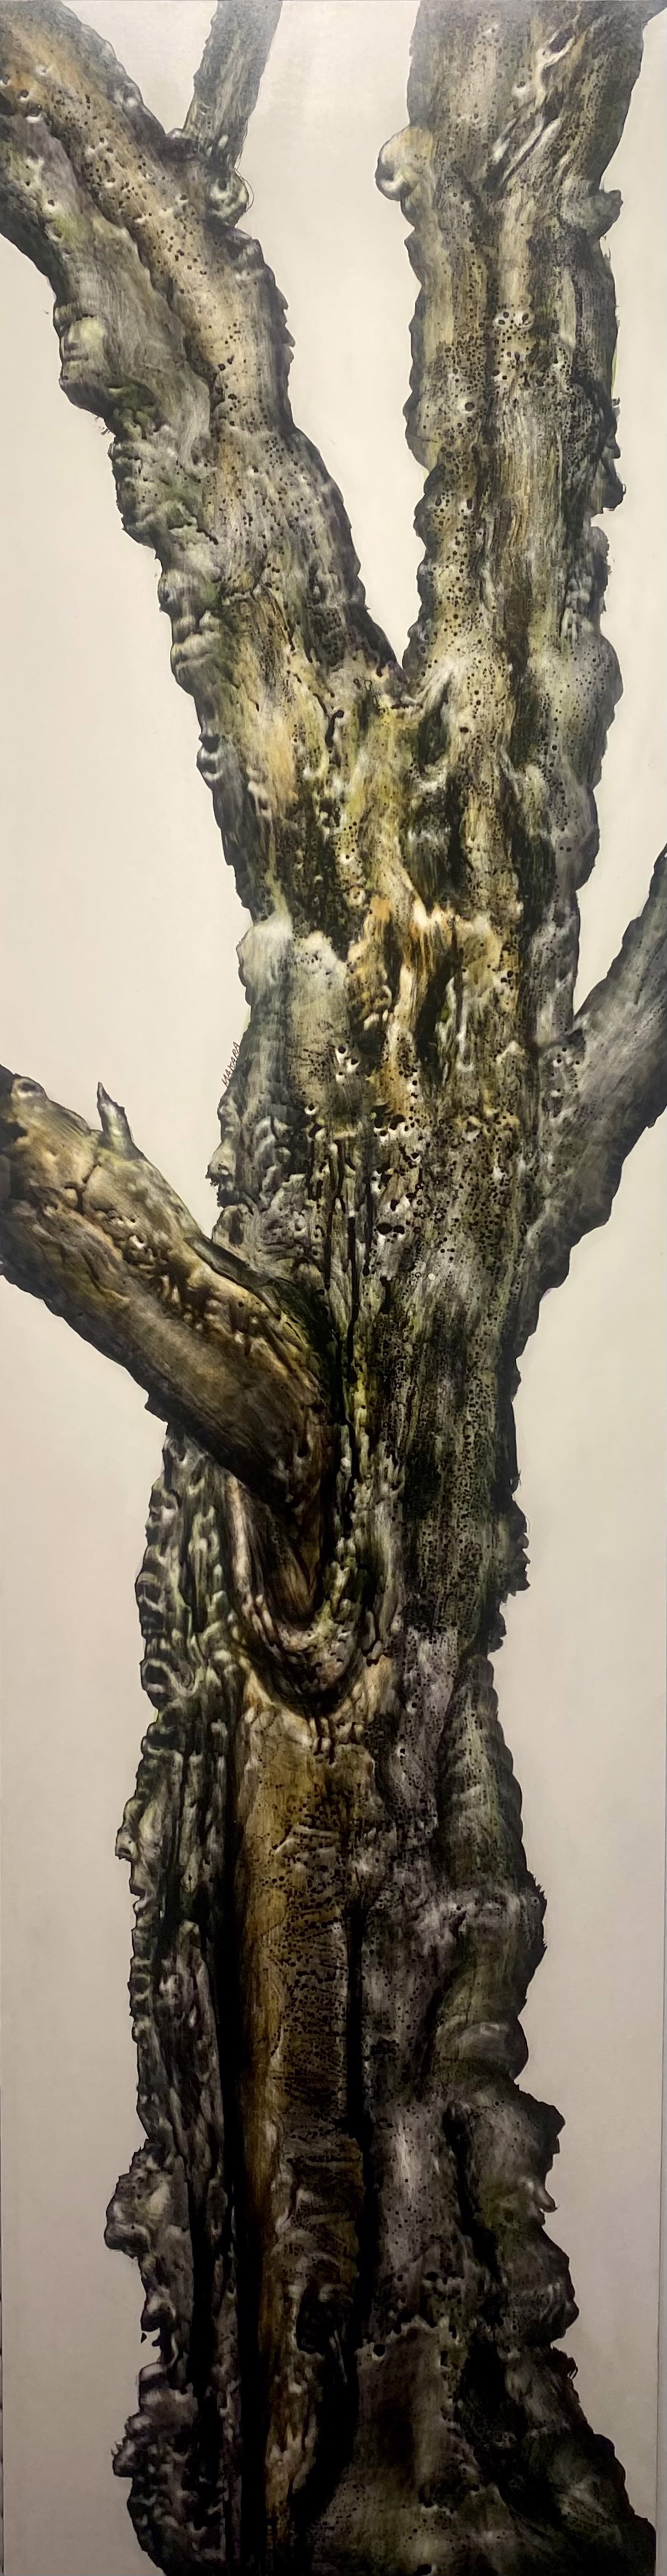 Tree #7 by Susan Makara